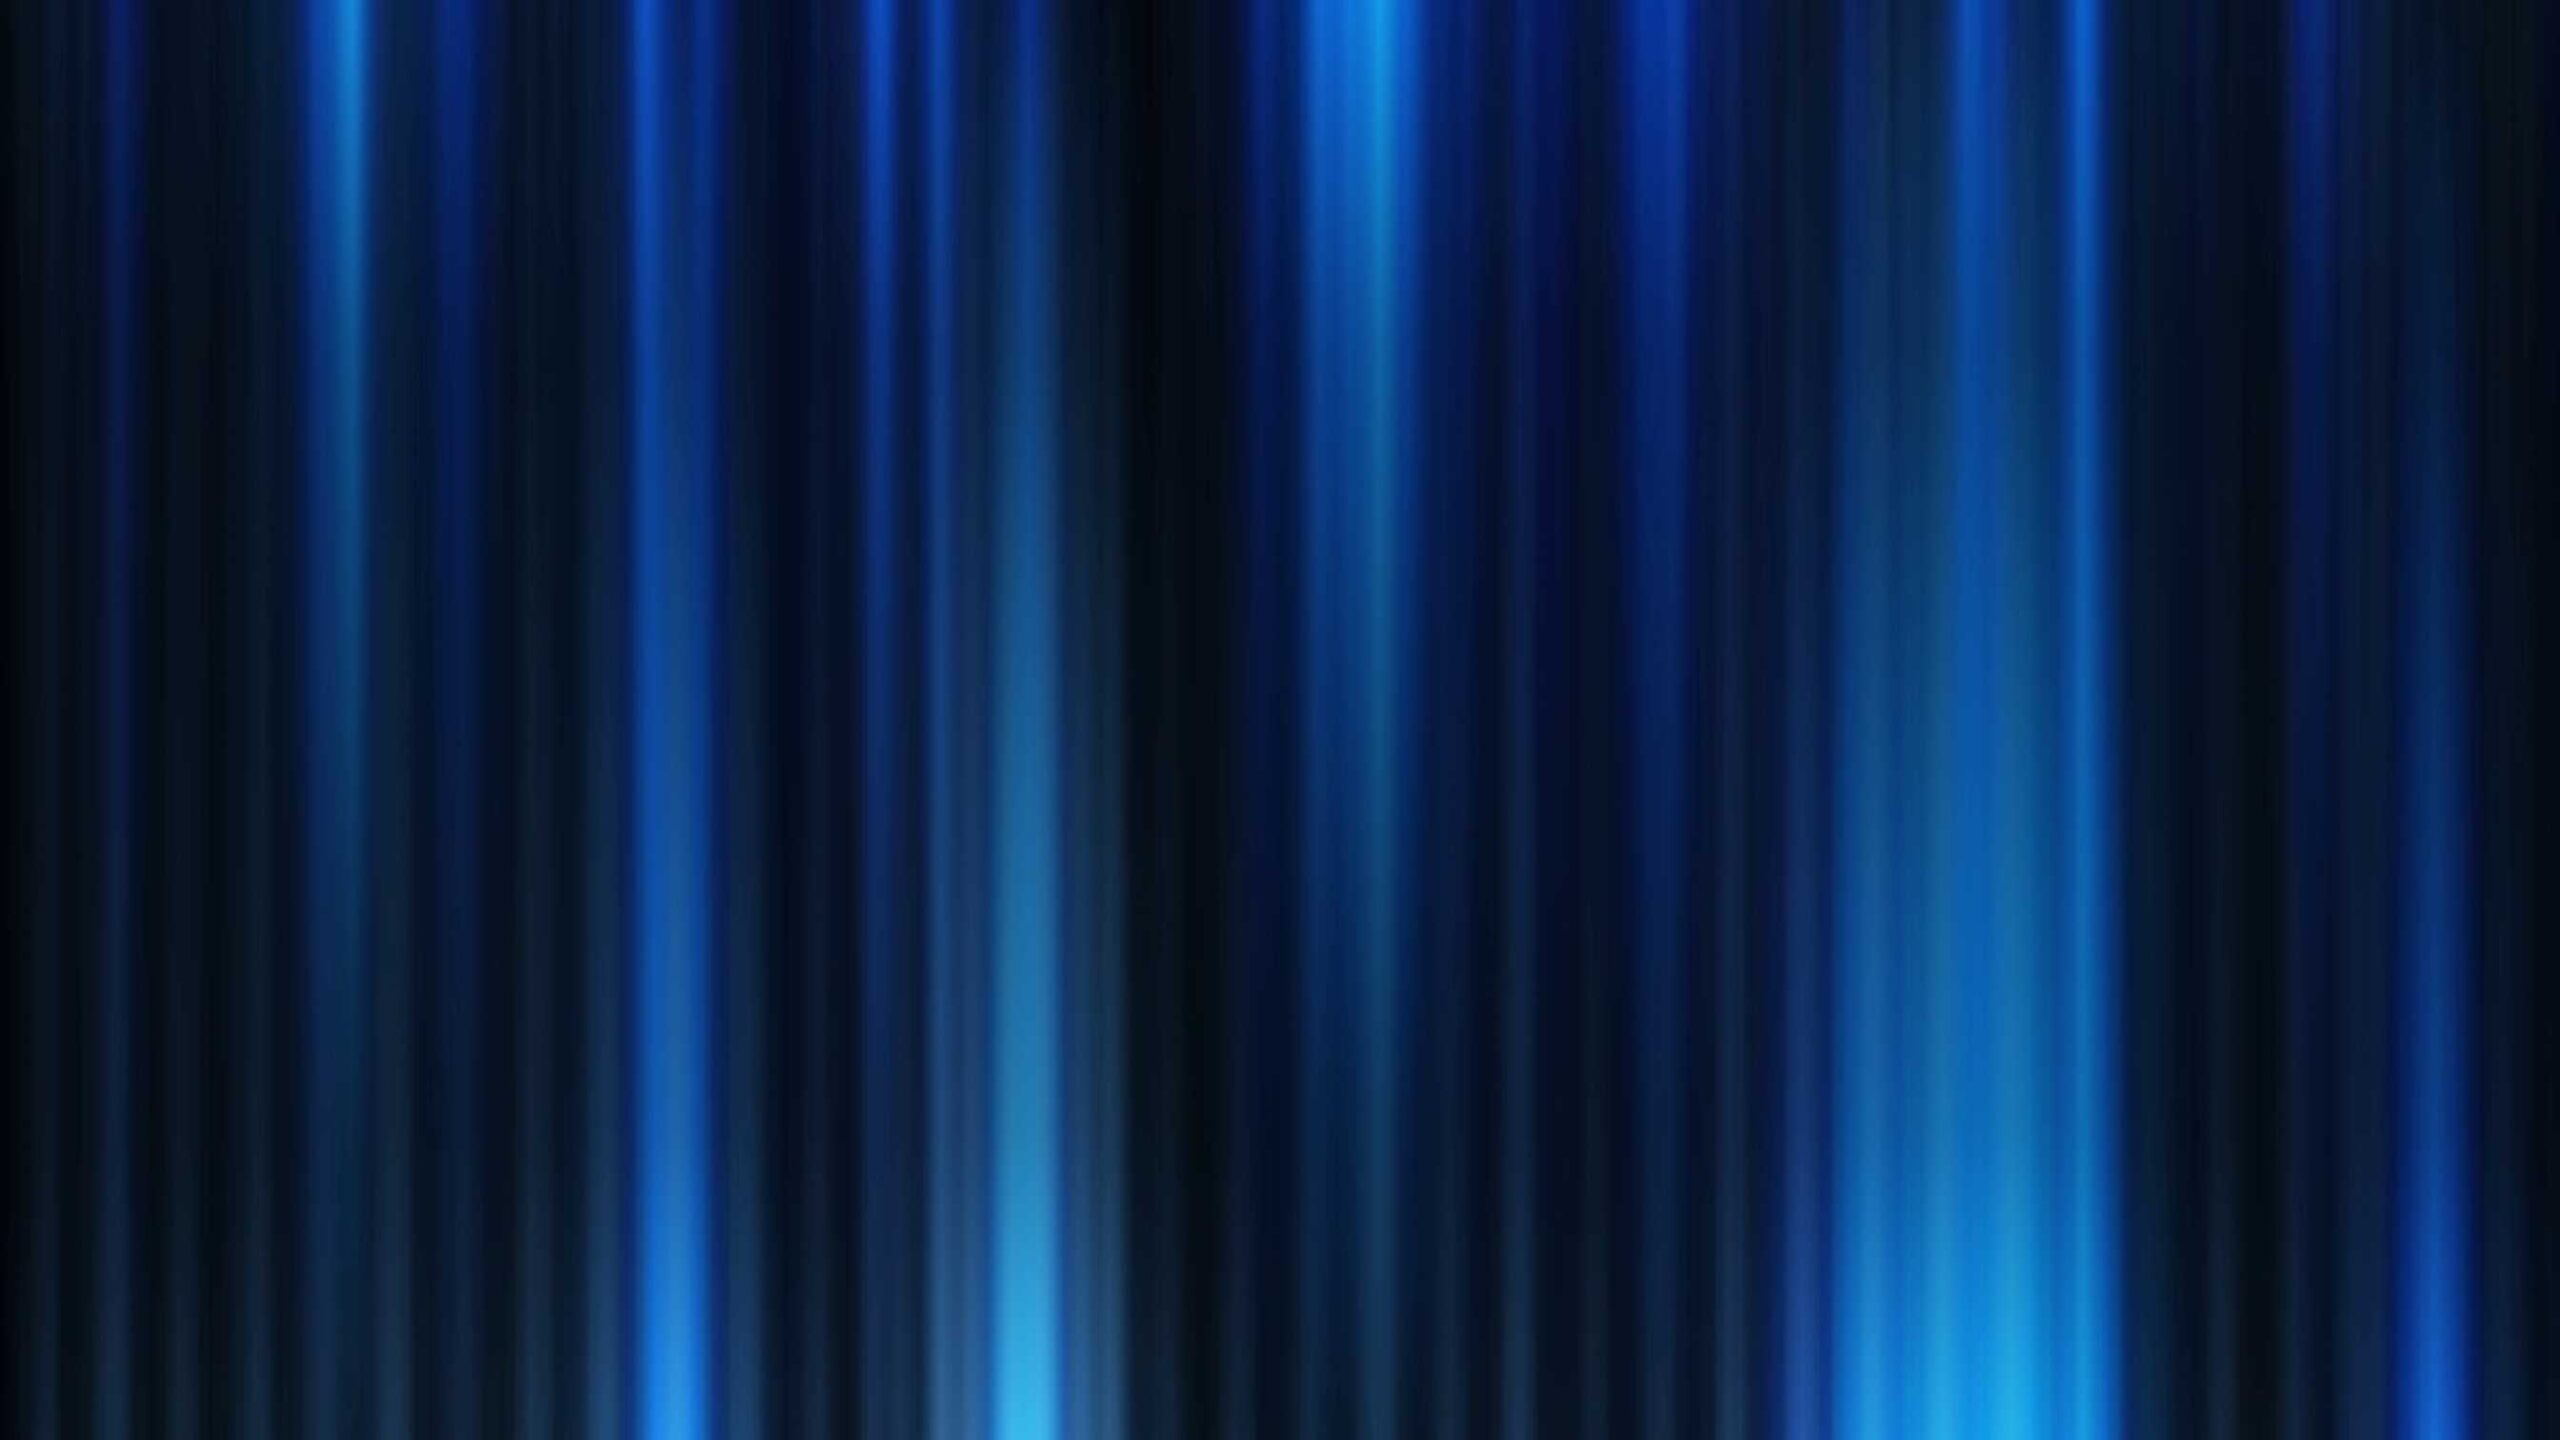 4K Blue Motion Background || VFX Free To Use 4K Screensaver || FREE DOWNLOAD